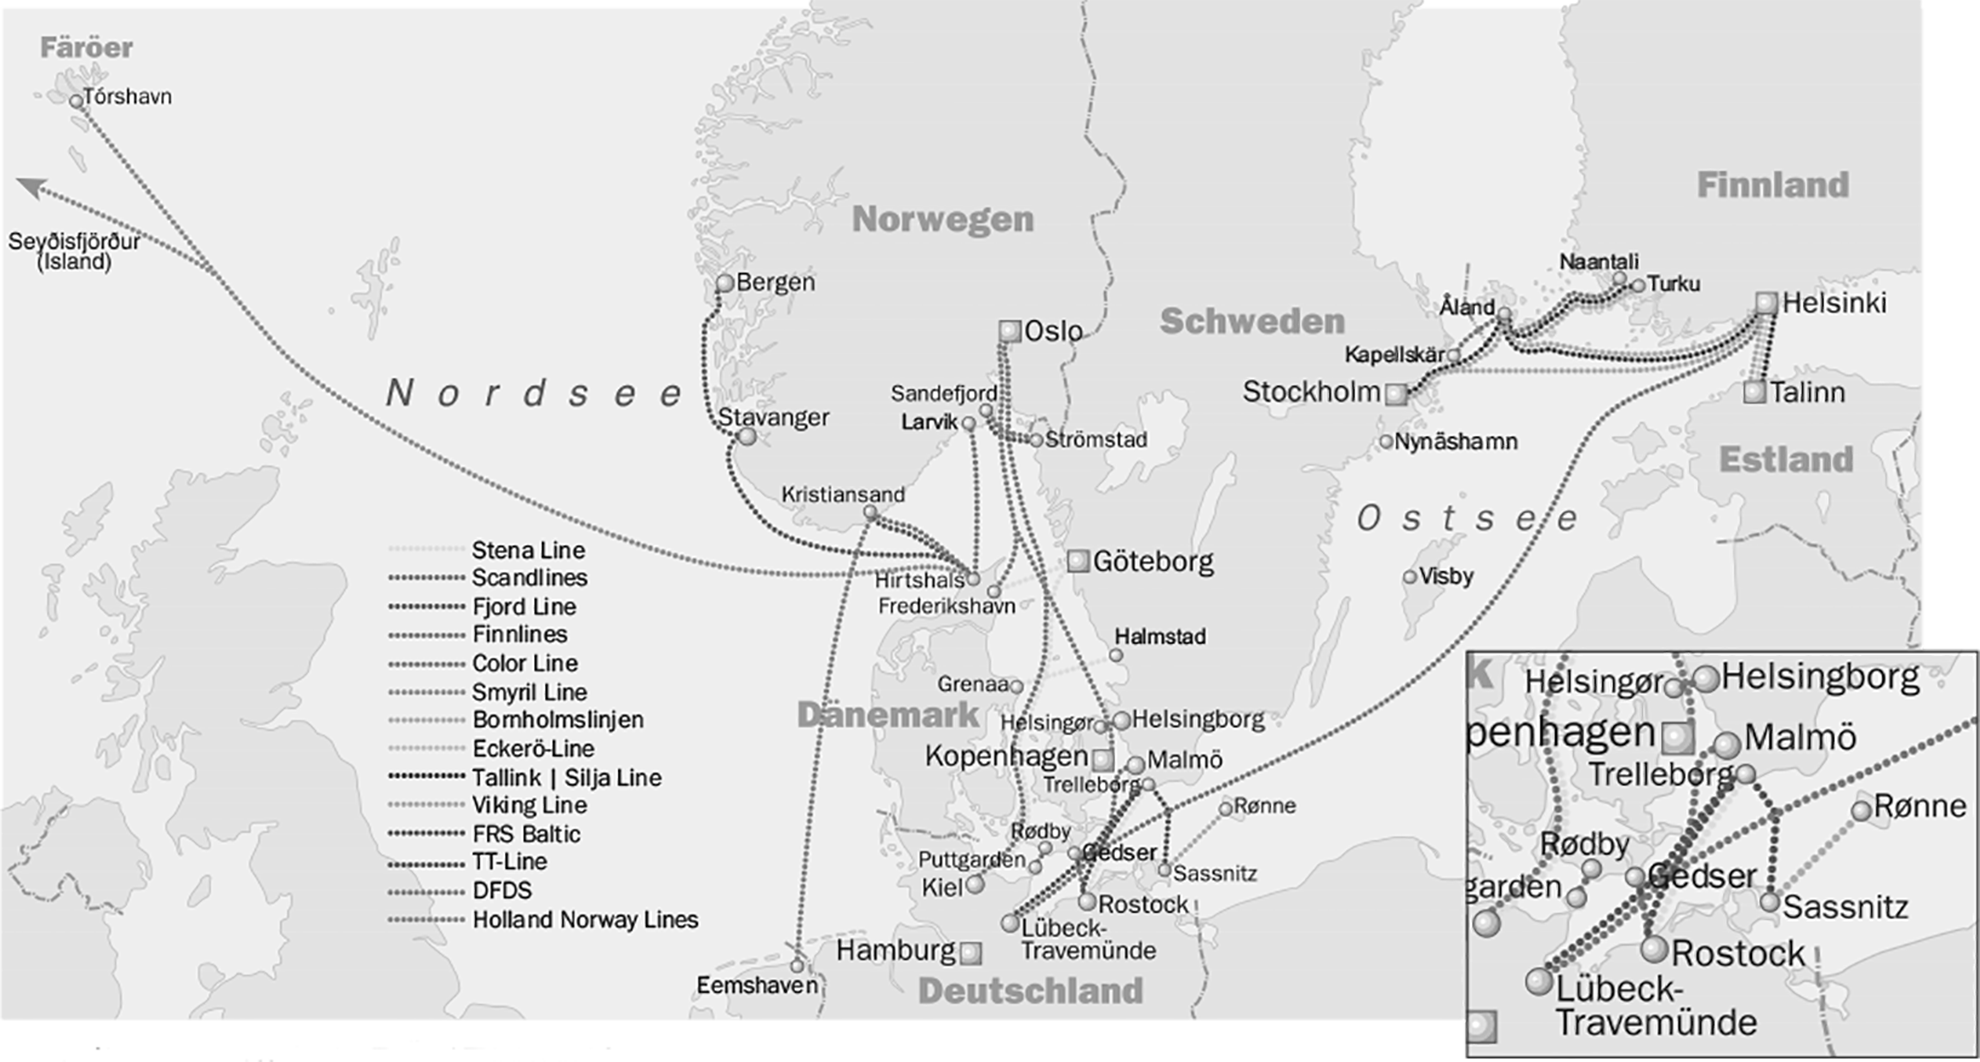 Fährverbindungen-nach-Skandinavien-